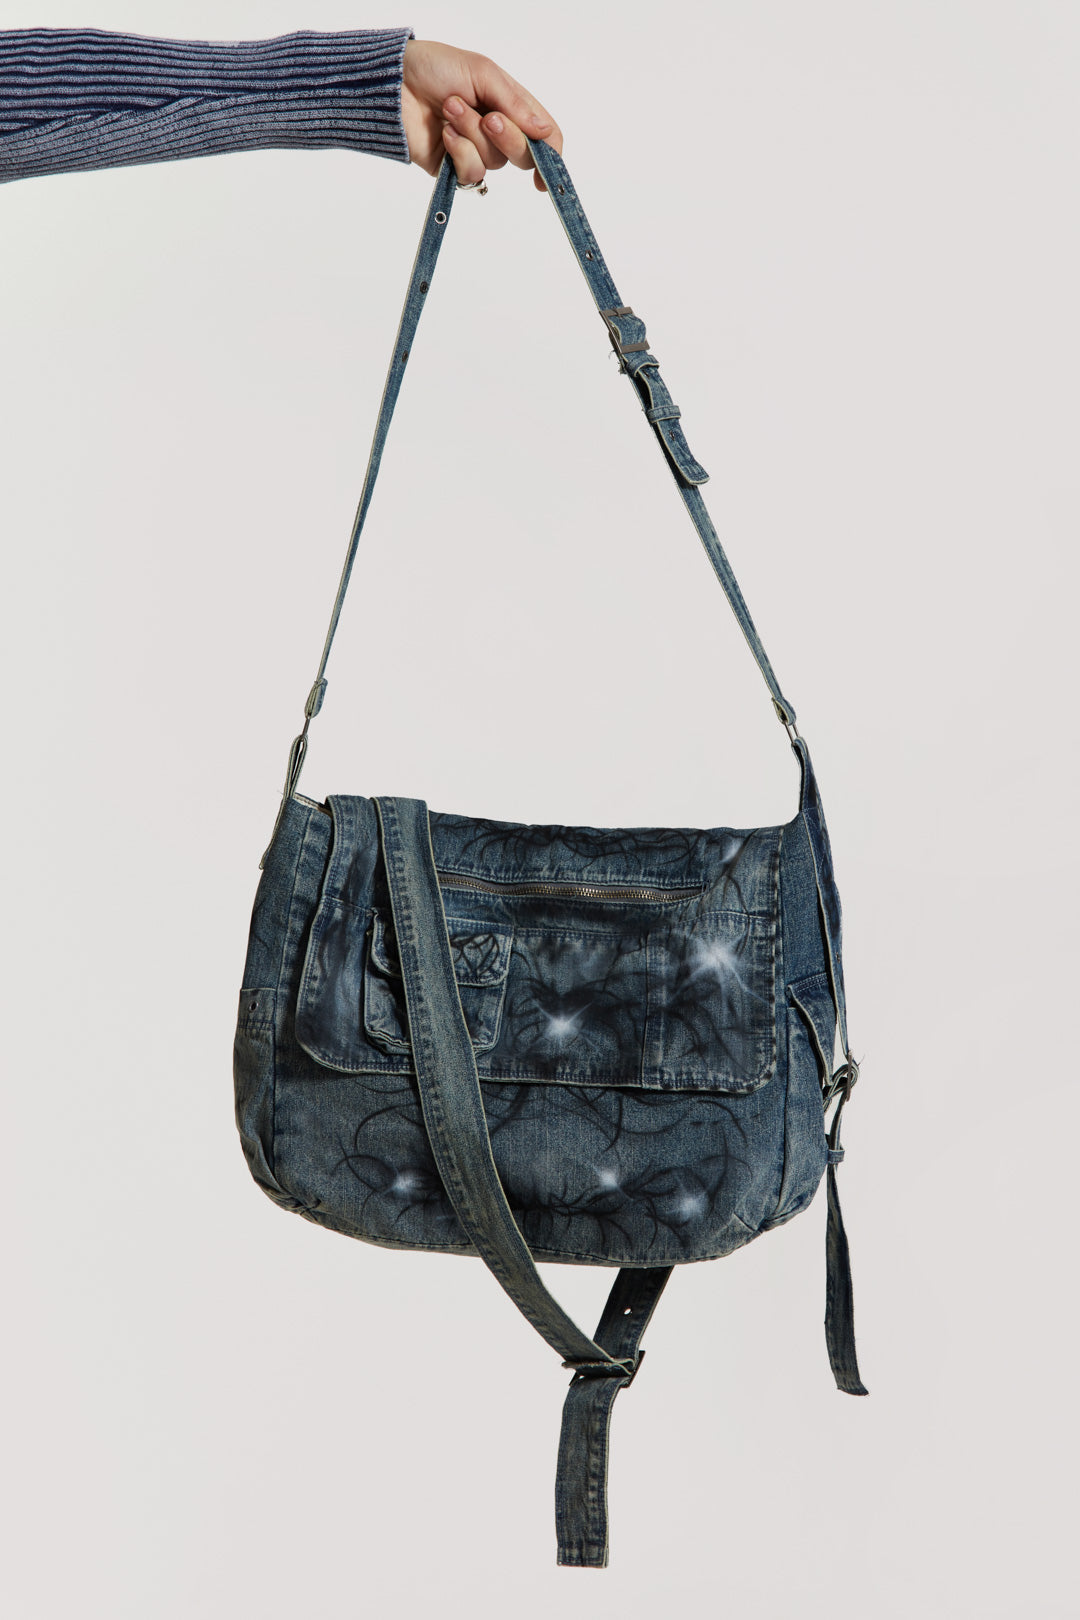 Cold F33t Airbrushed Blue Denim Bag | Jaded London